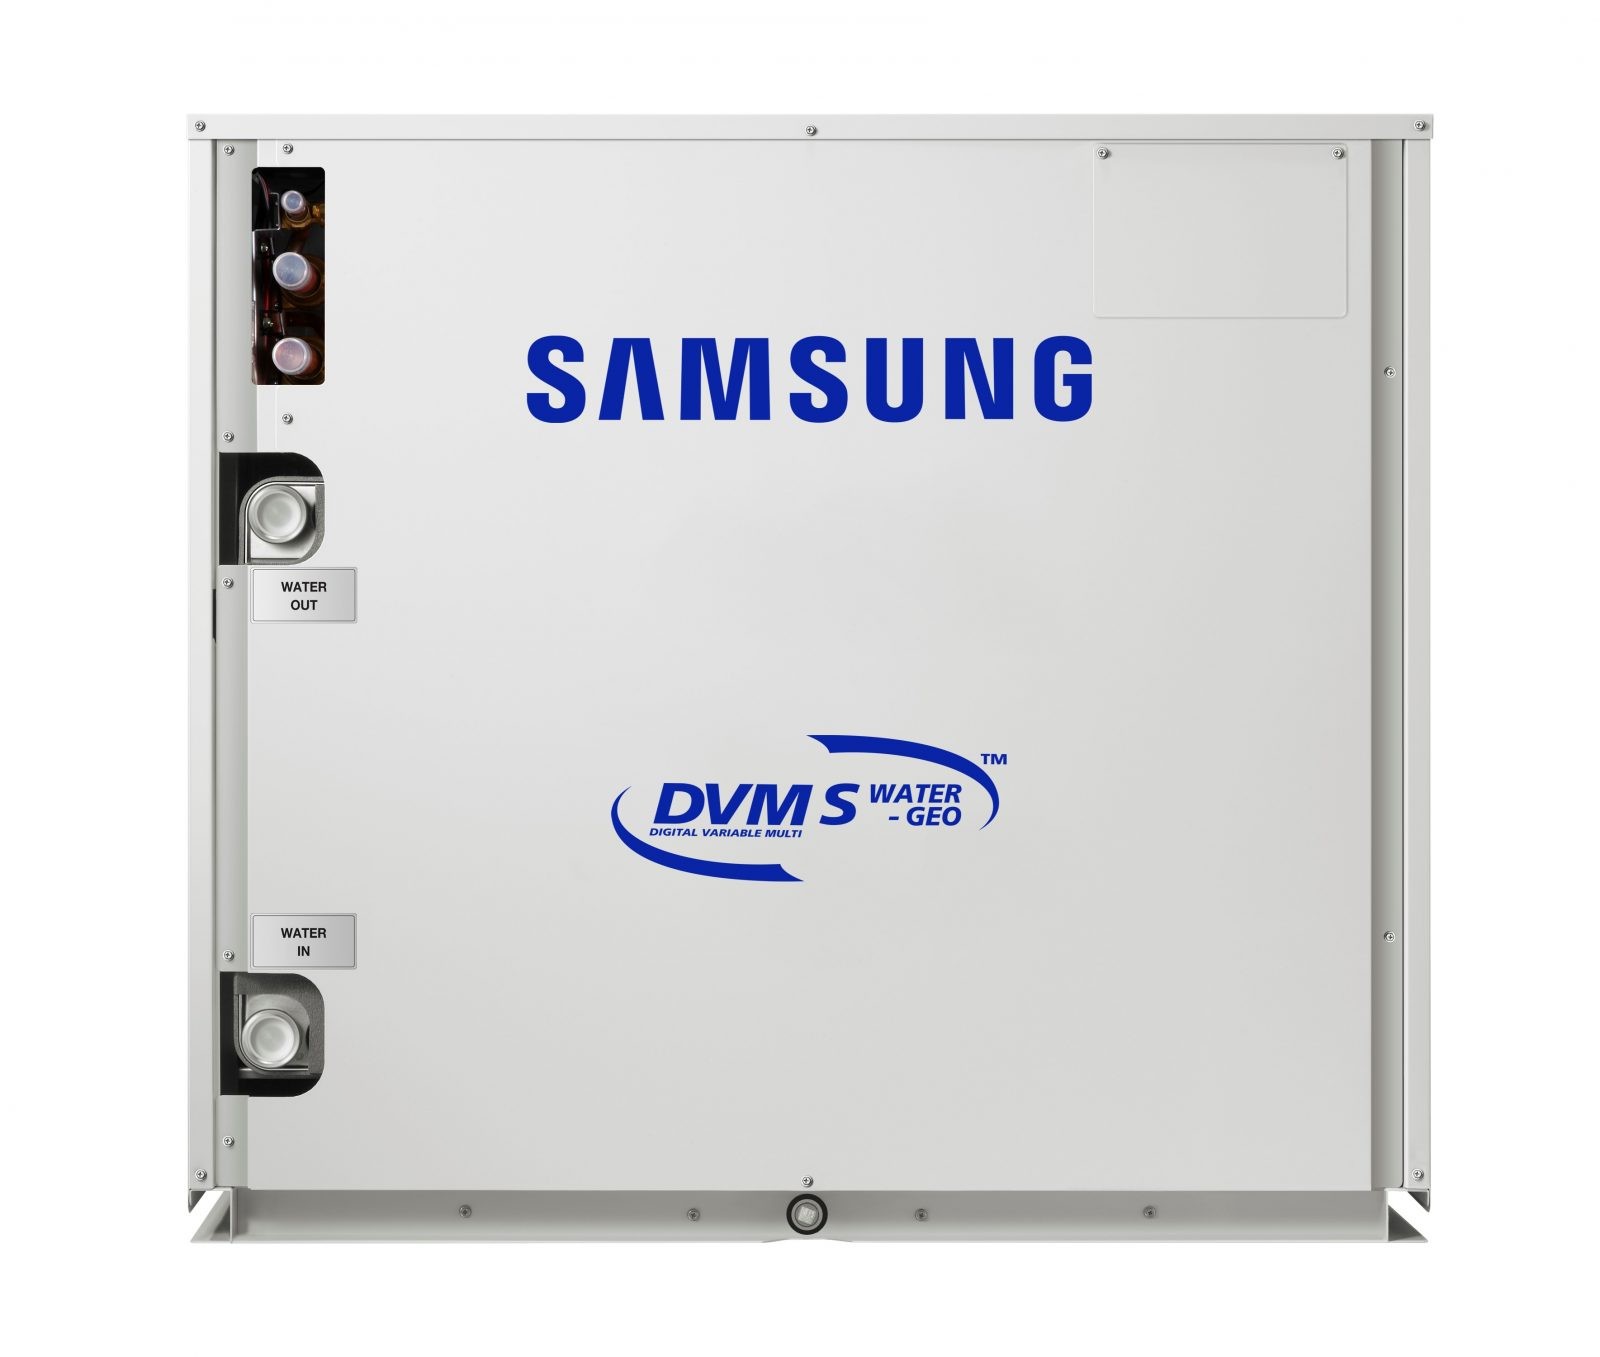 Външно тяло Samsung DVM S Water AM300KXWANR